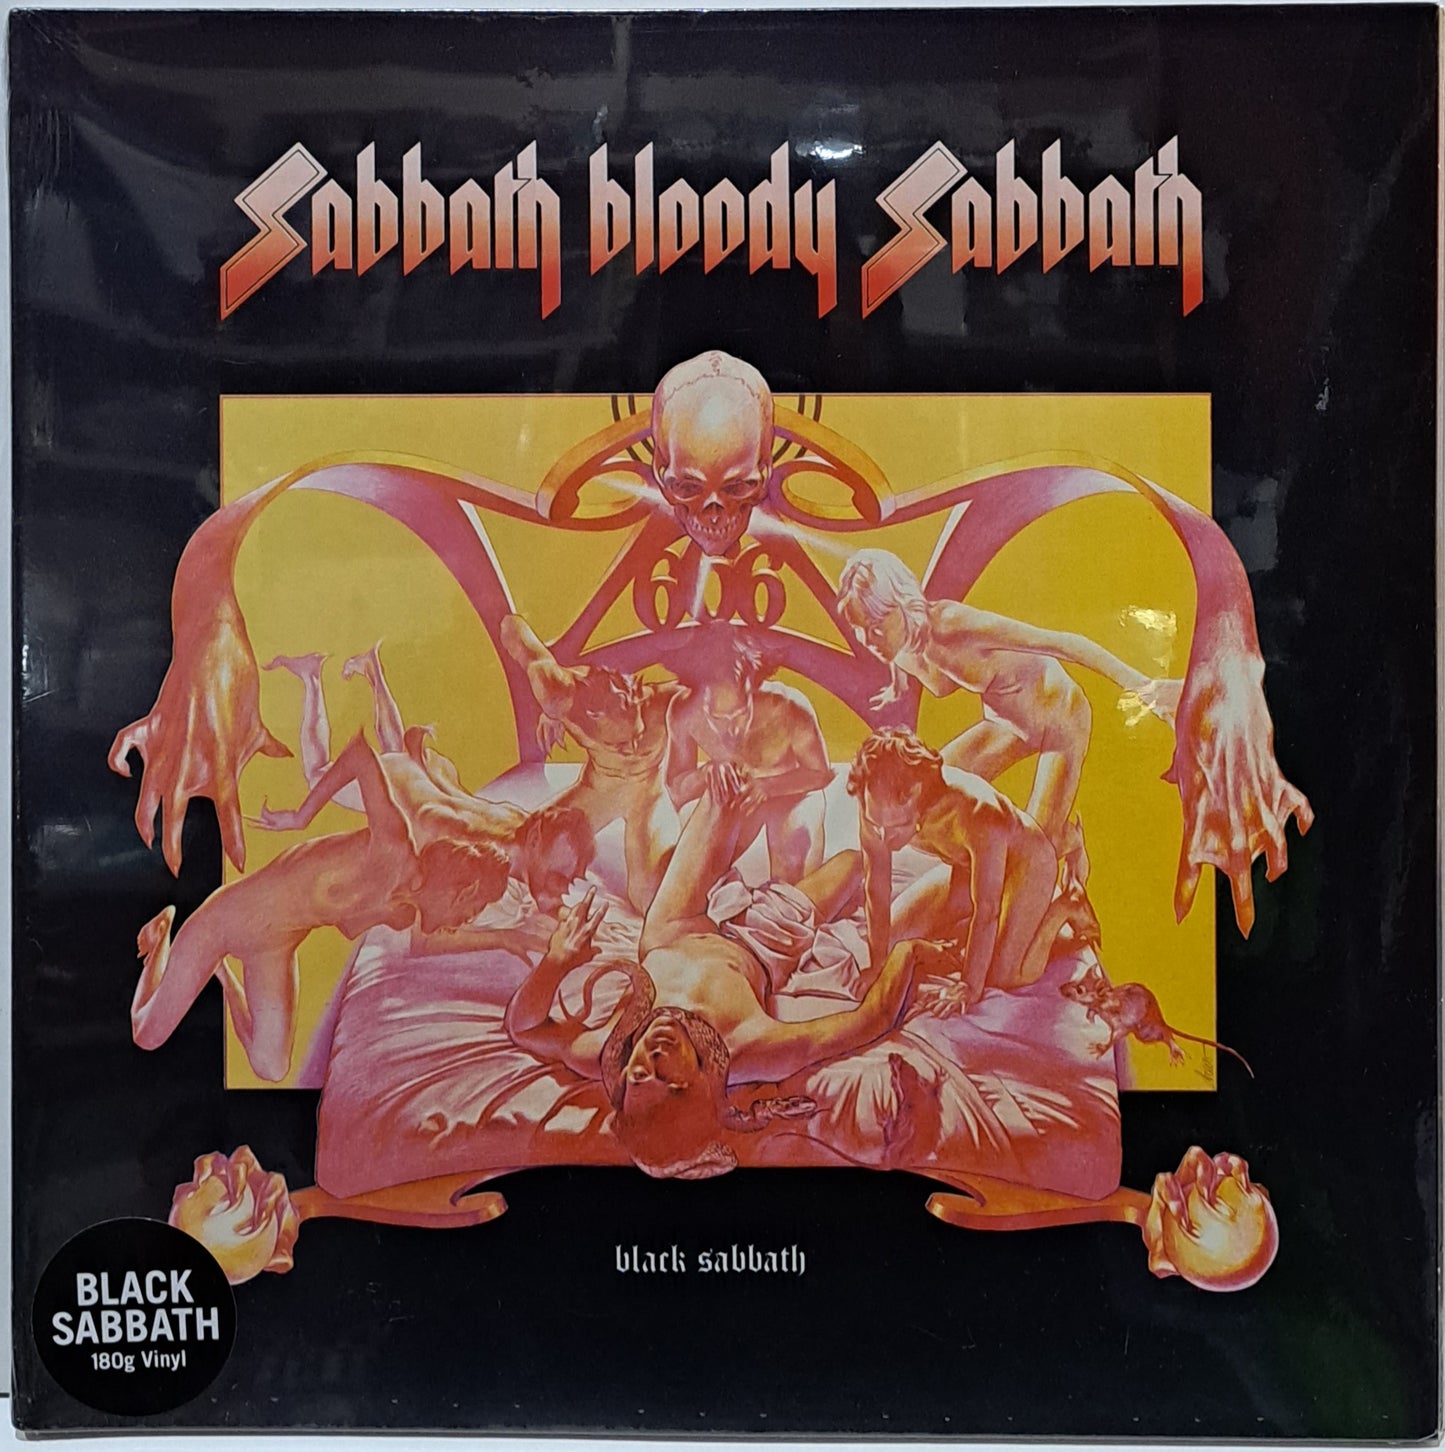 BLACK SABBATH - SABBATH BLOODY SABBATH  LP